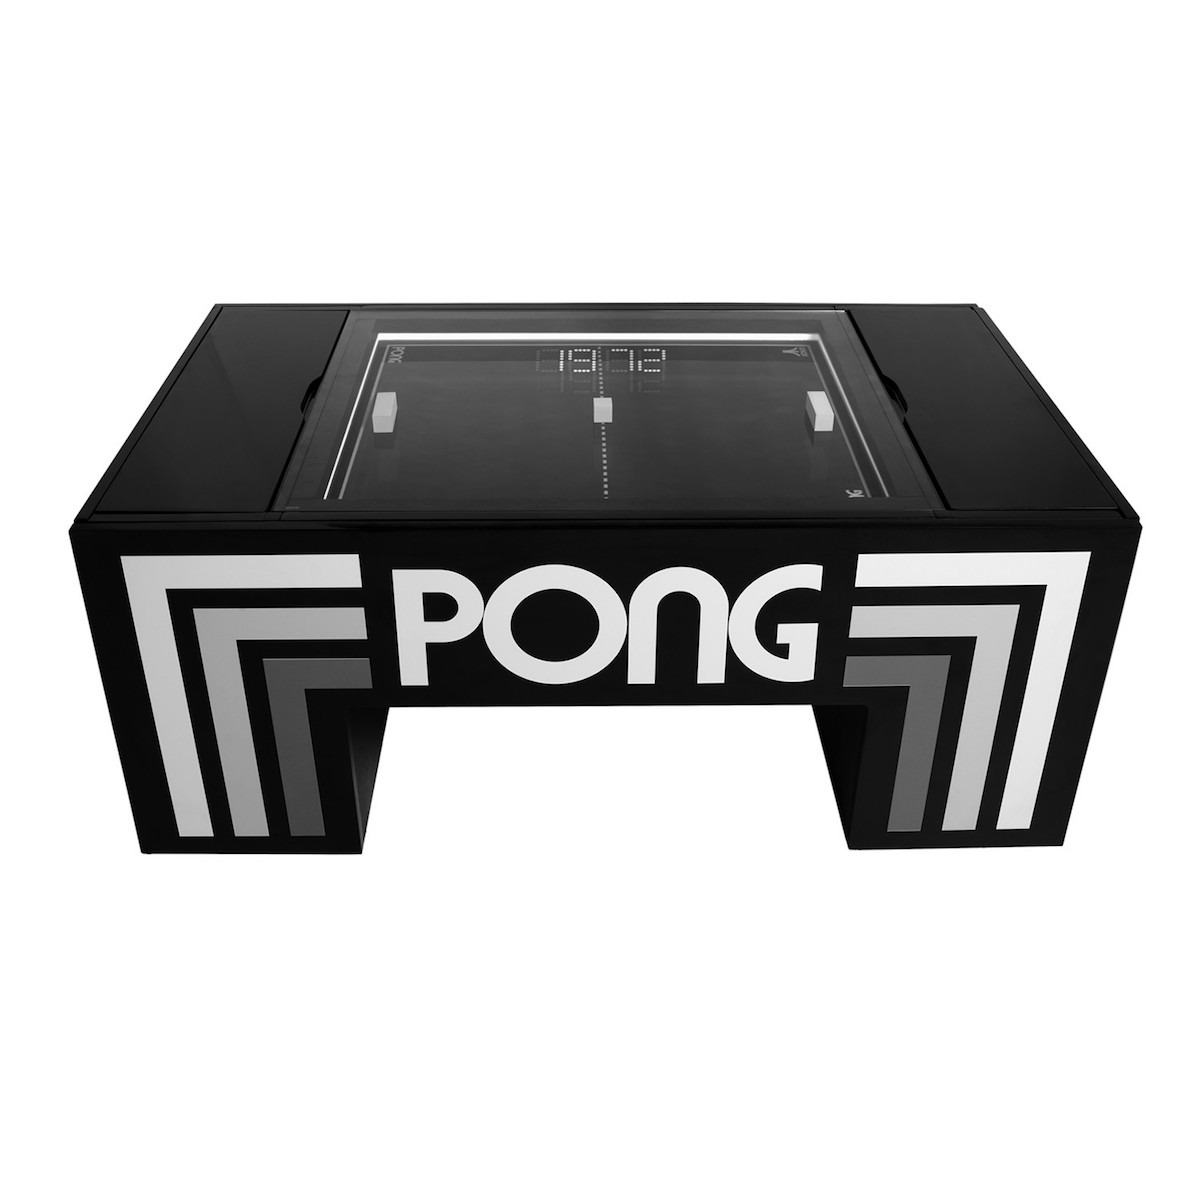 Atari-Pong-Table-1-1.jpg